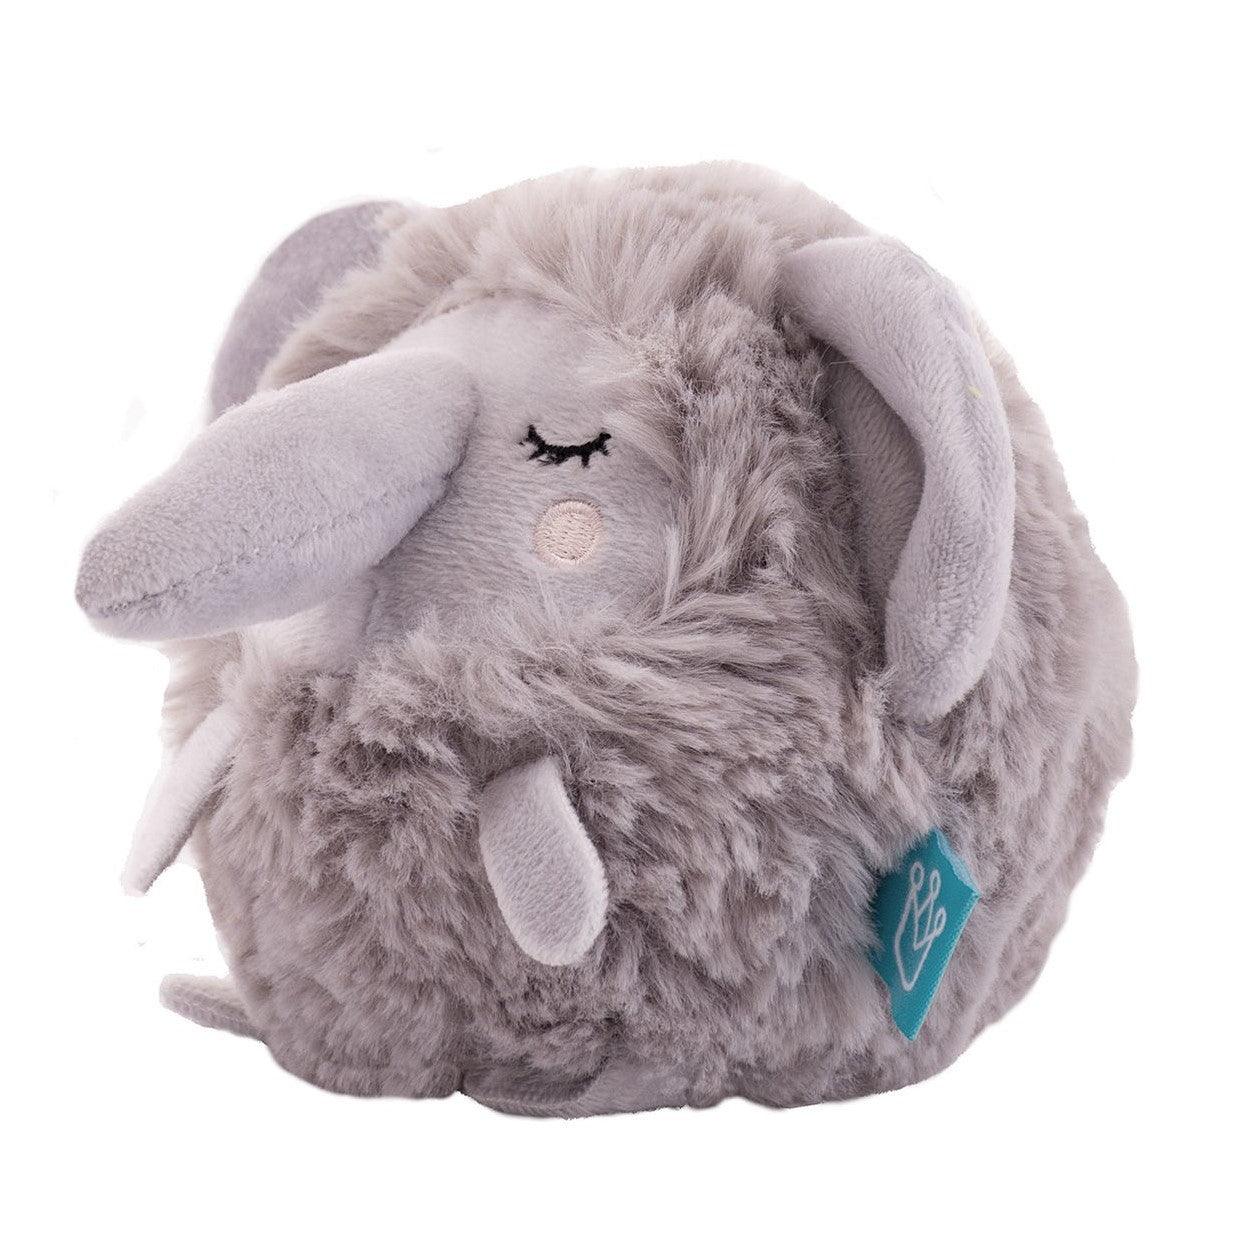 Manhattan Toy: Squeezmeez Elephant foam cuddly elephant